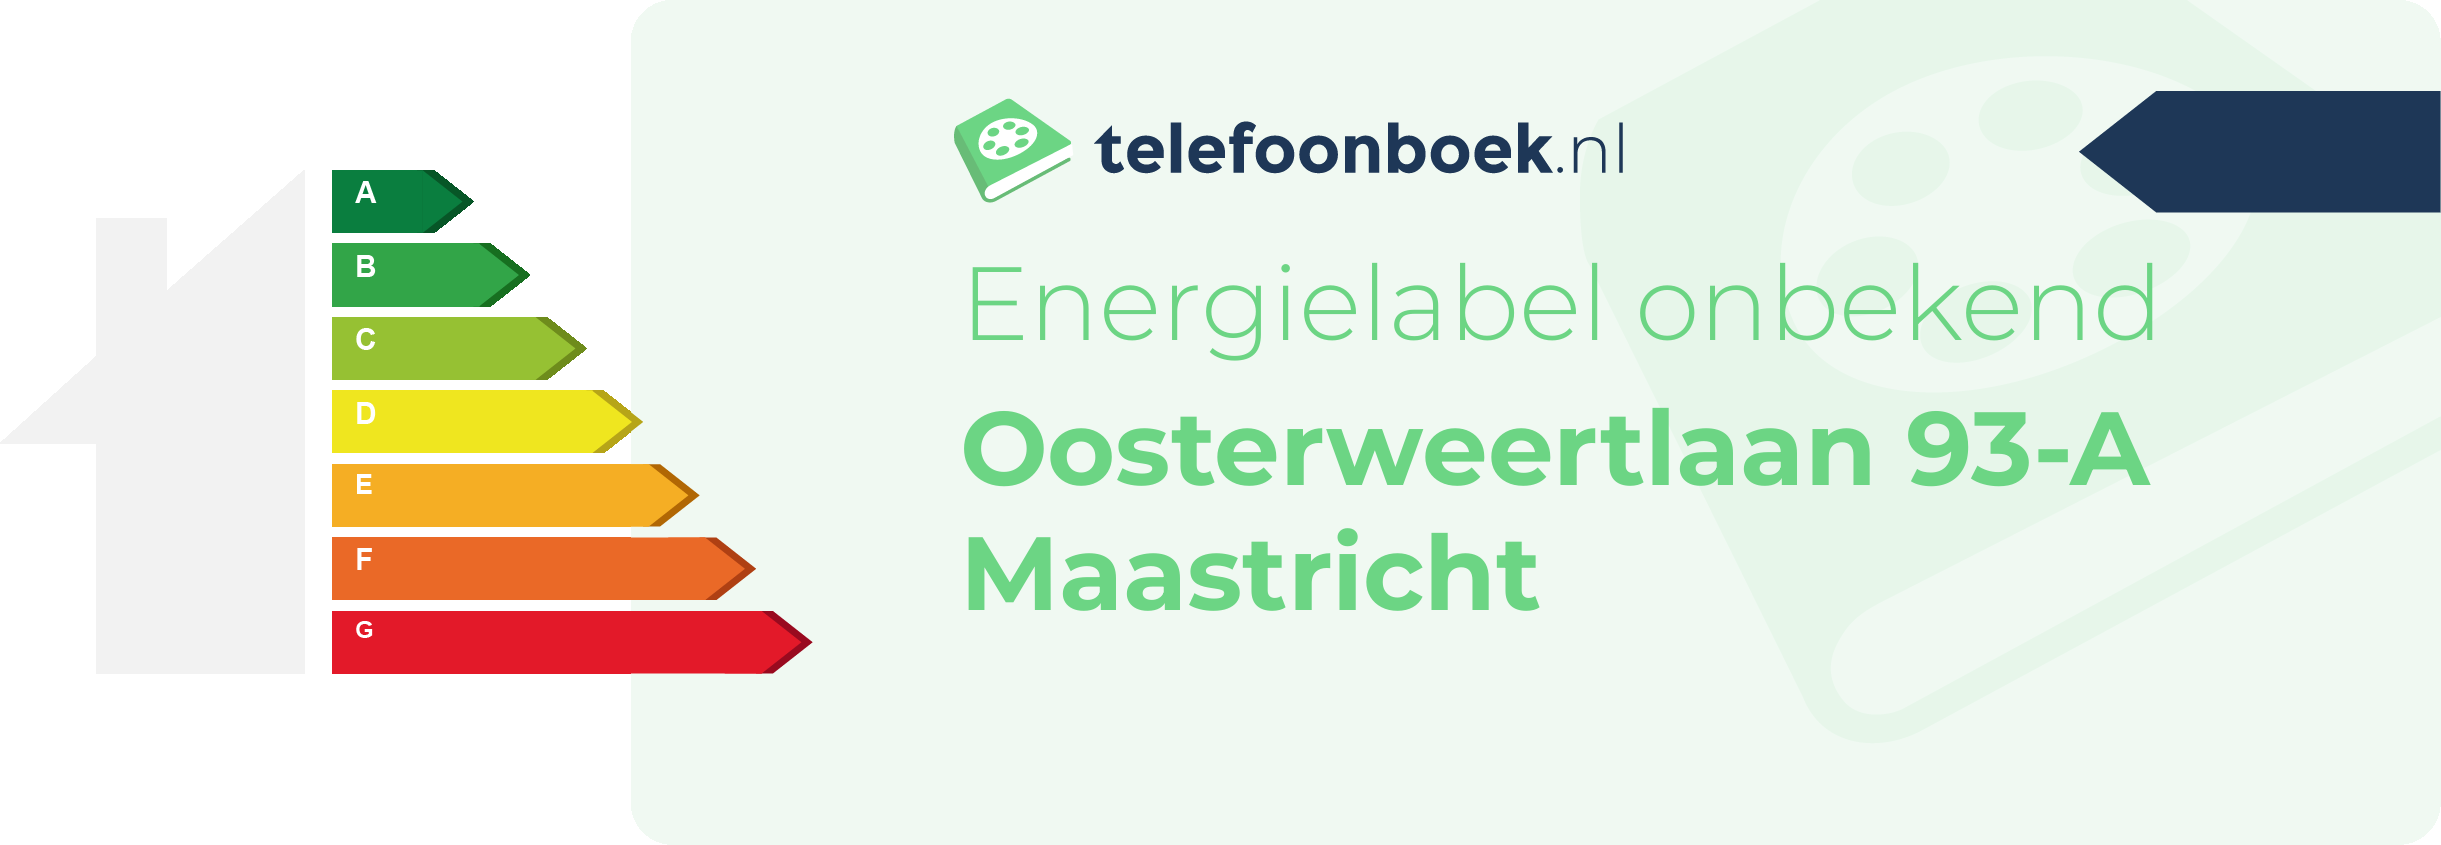 Energielabel Oosterweertlaan 93-A Maastricht